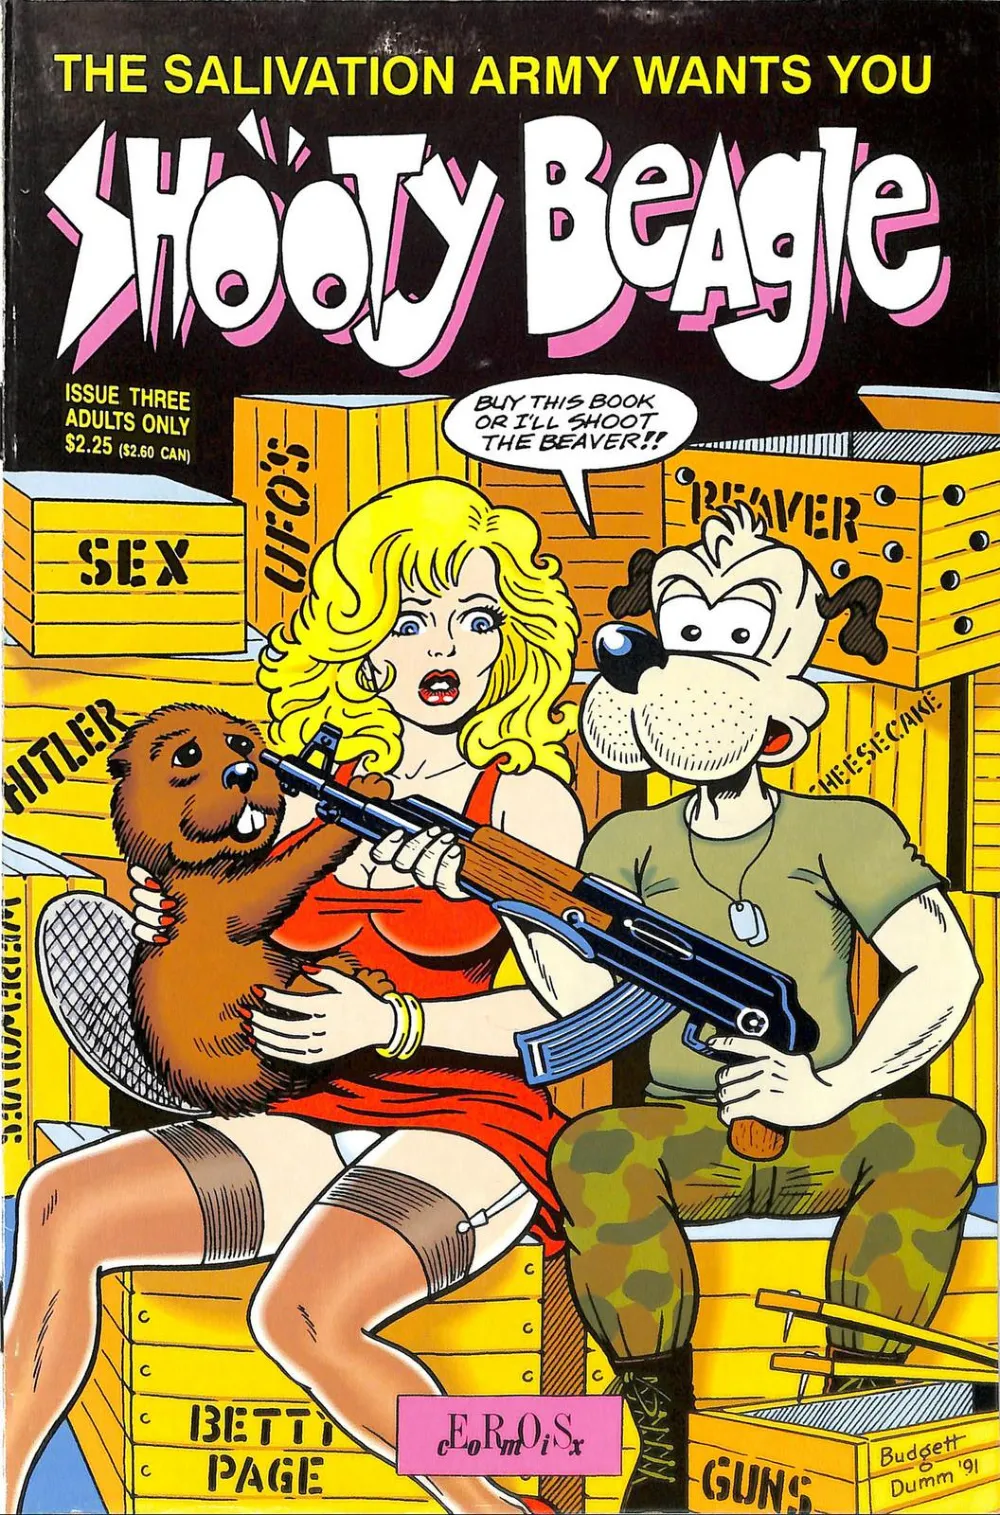 Shooty Beagle No. 3 by Greg Budgett - Page 1